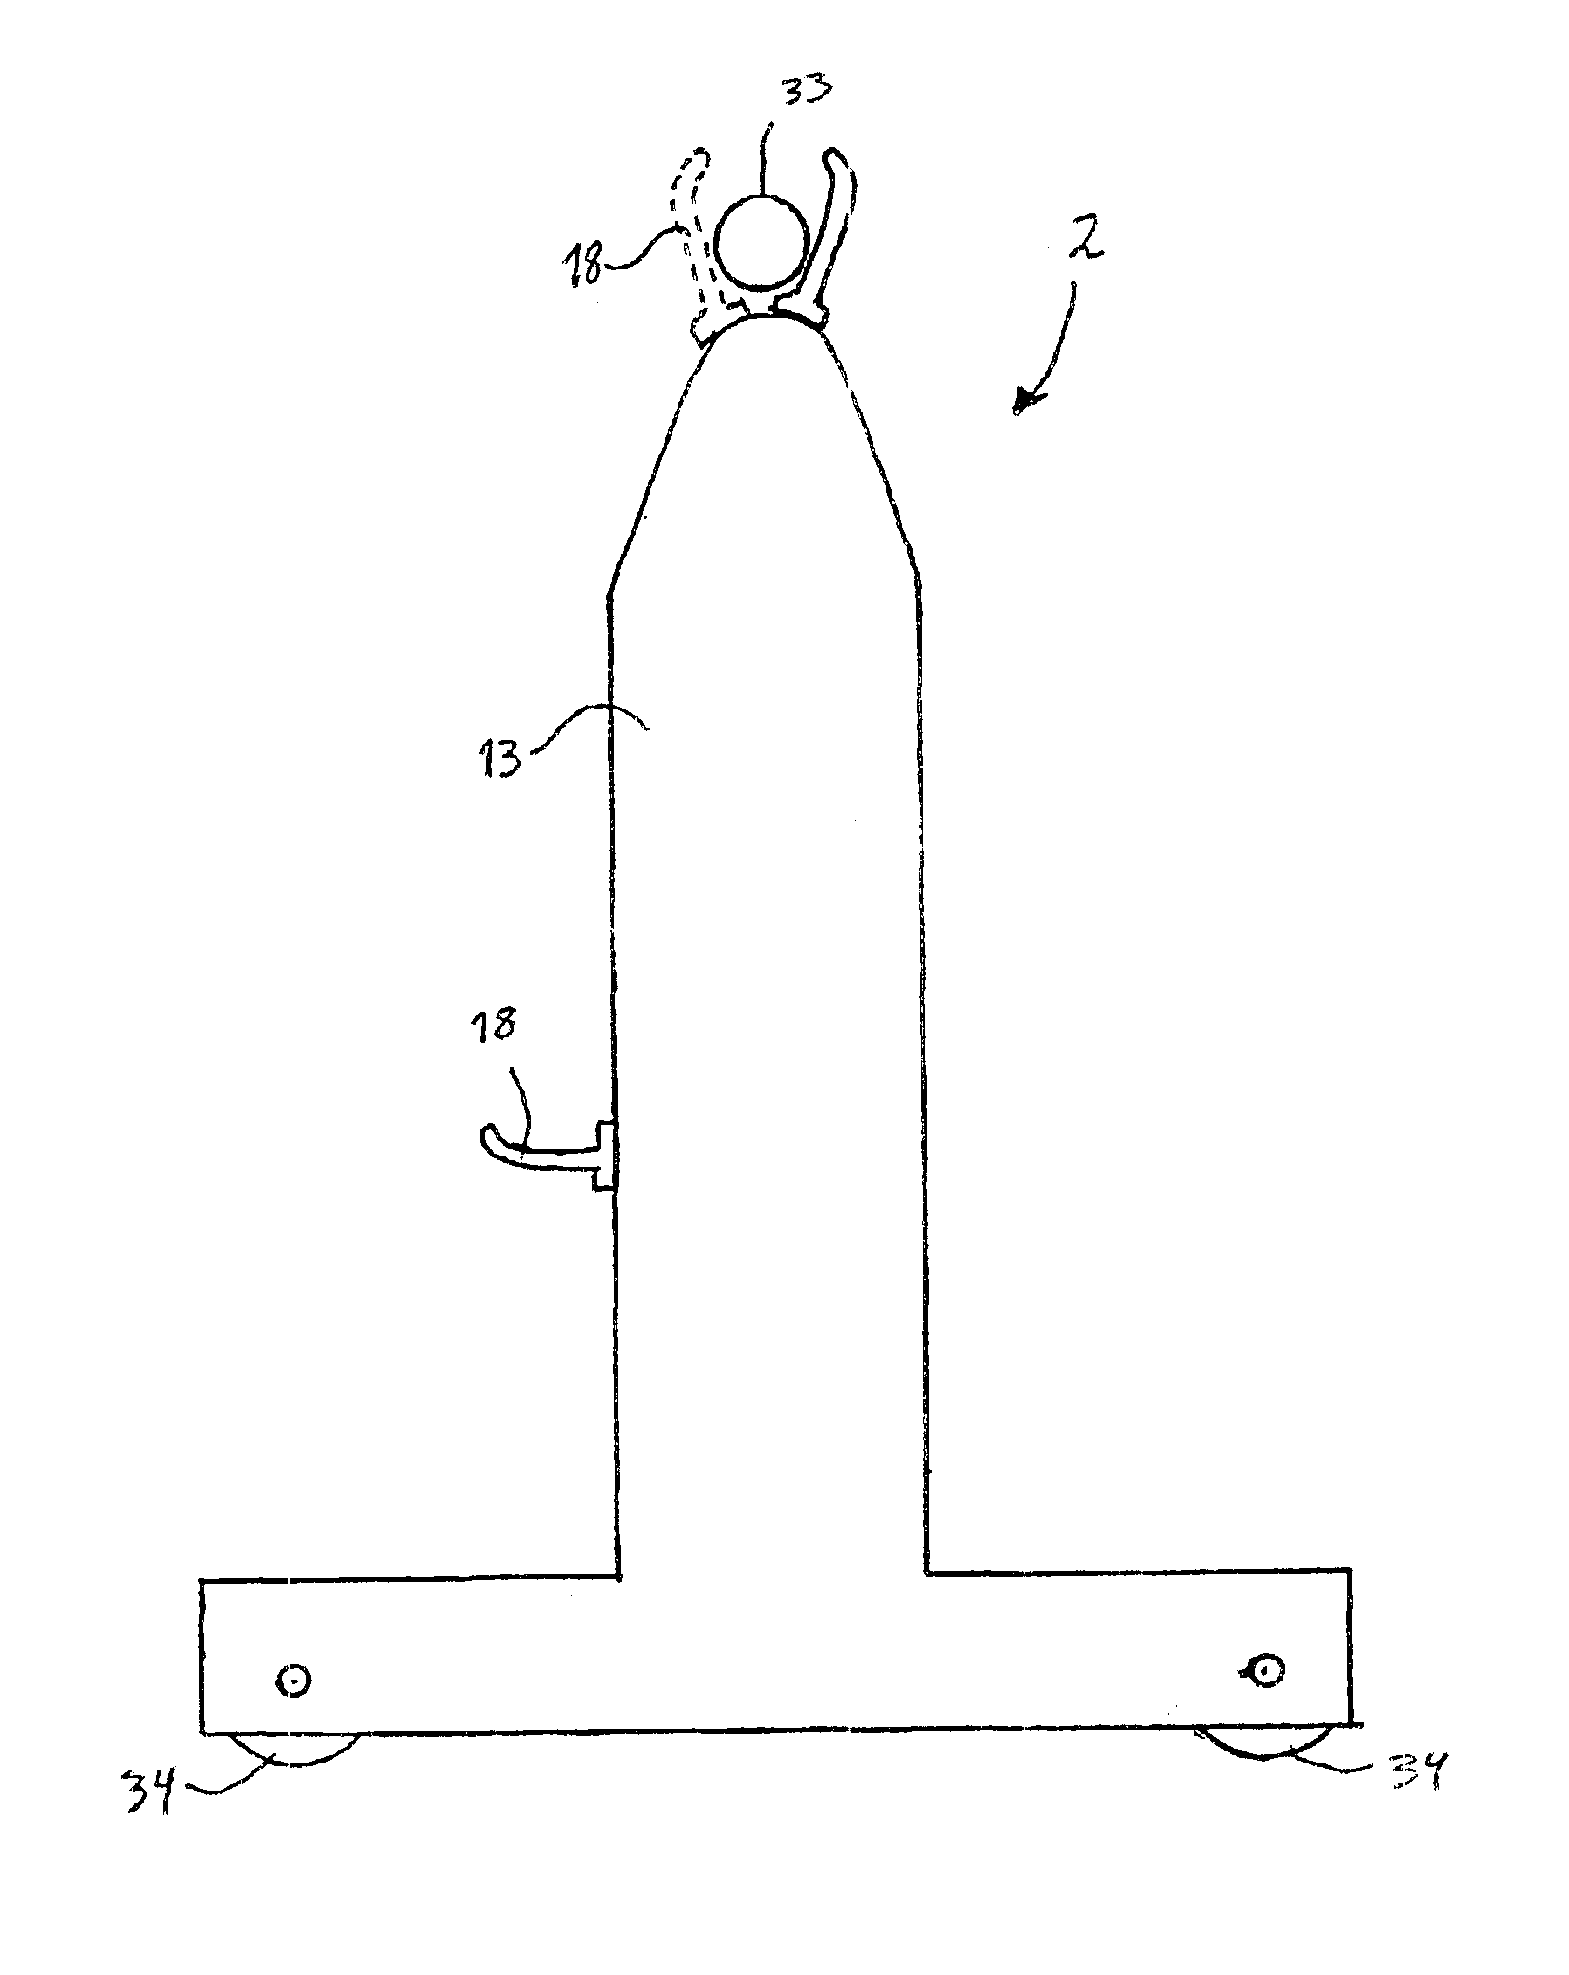 Horizontal pipe handling device